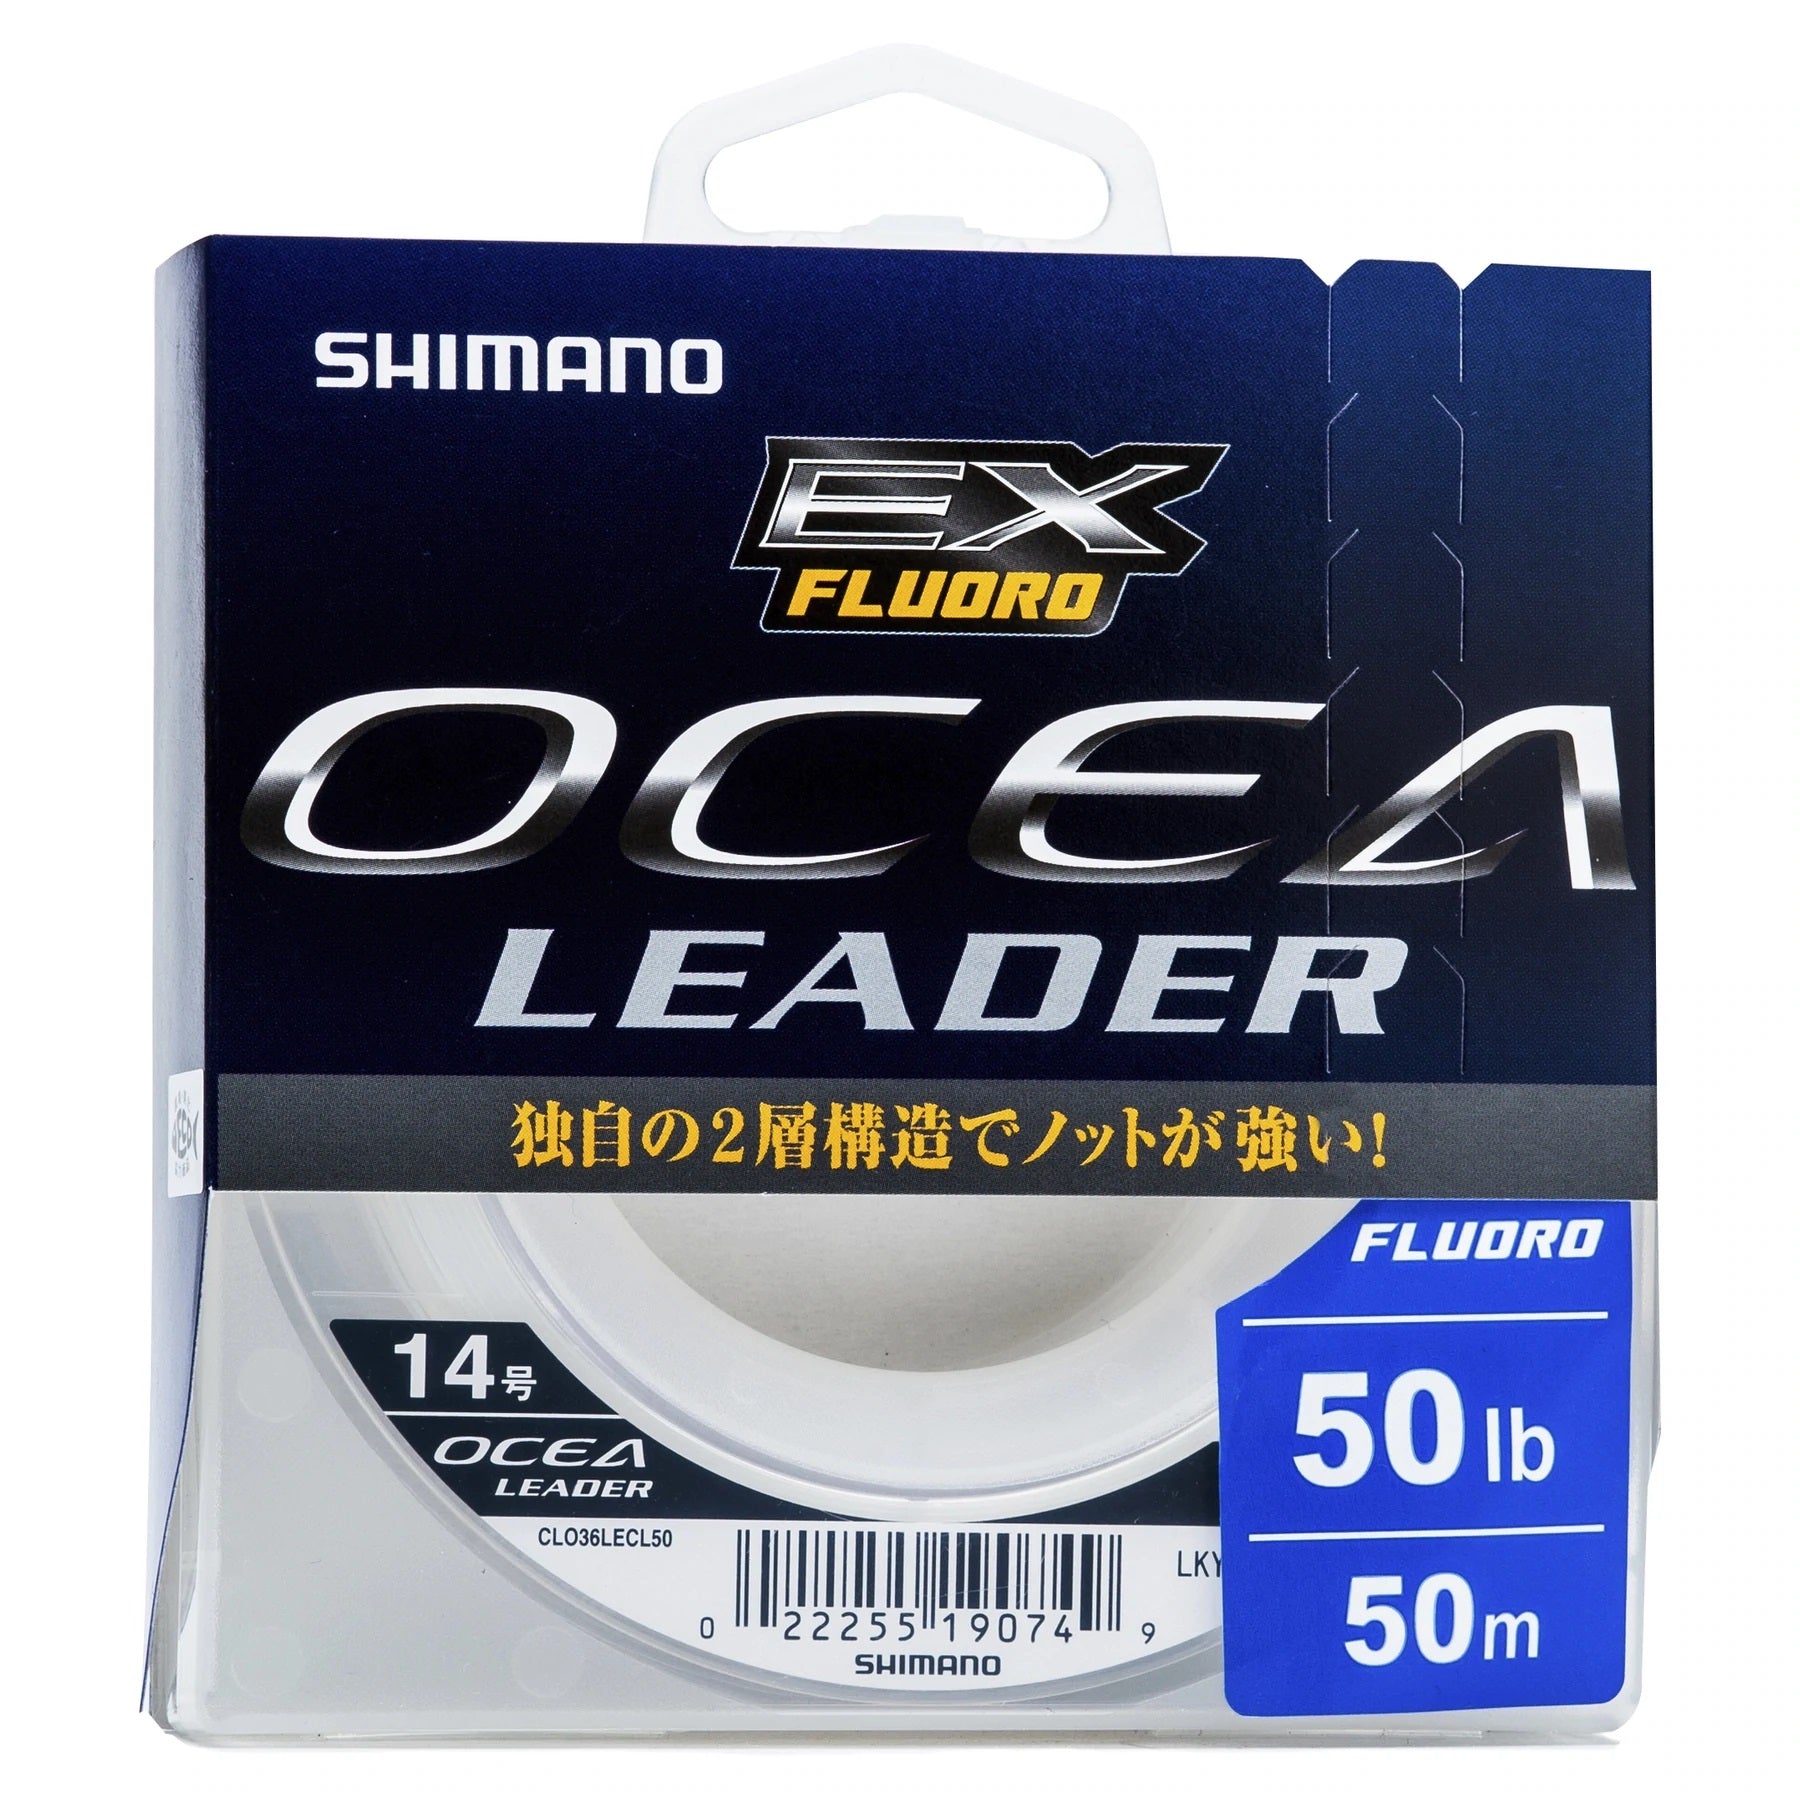 Shimano OCEA Fluorocarbon Leader 50lb - Discontinued Mega Clearance